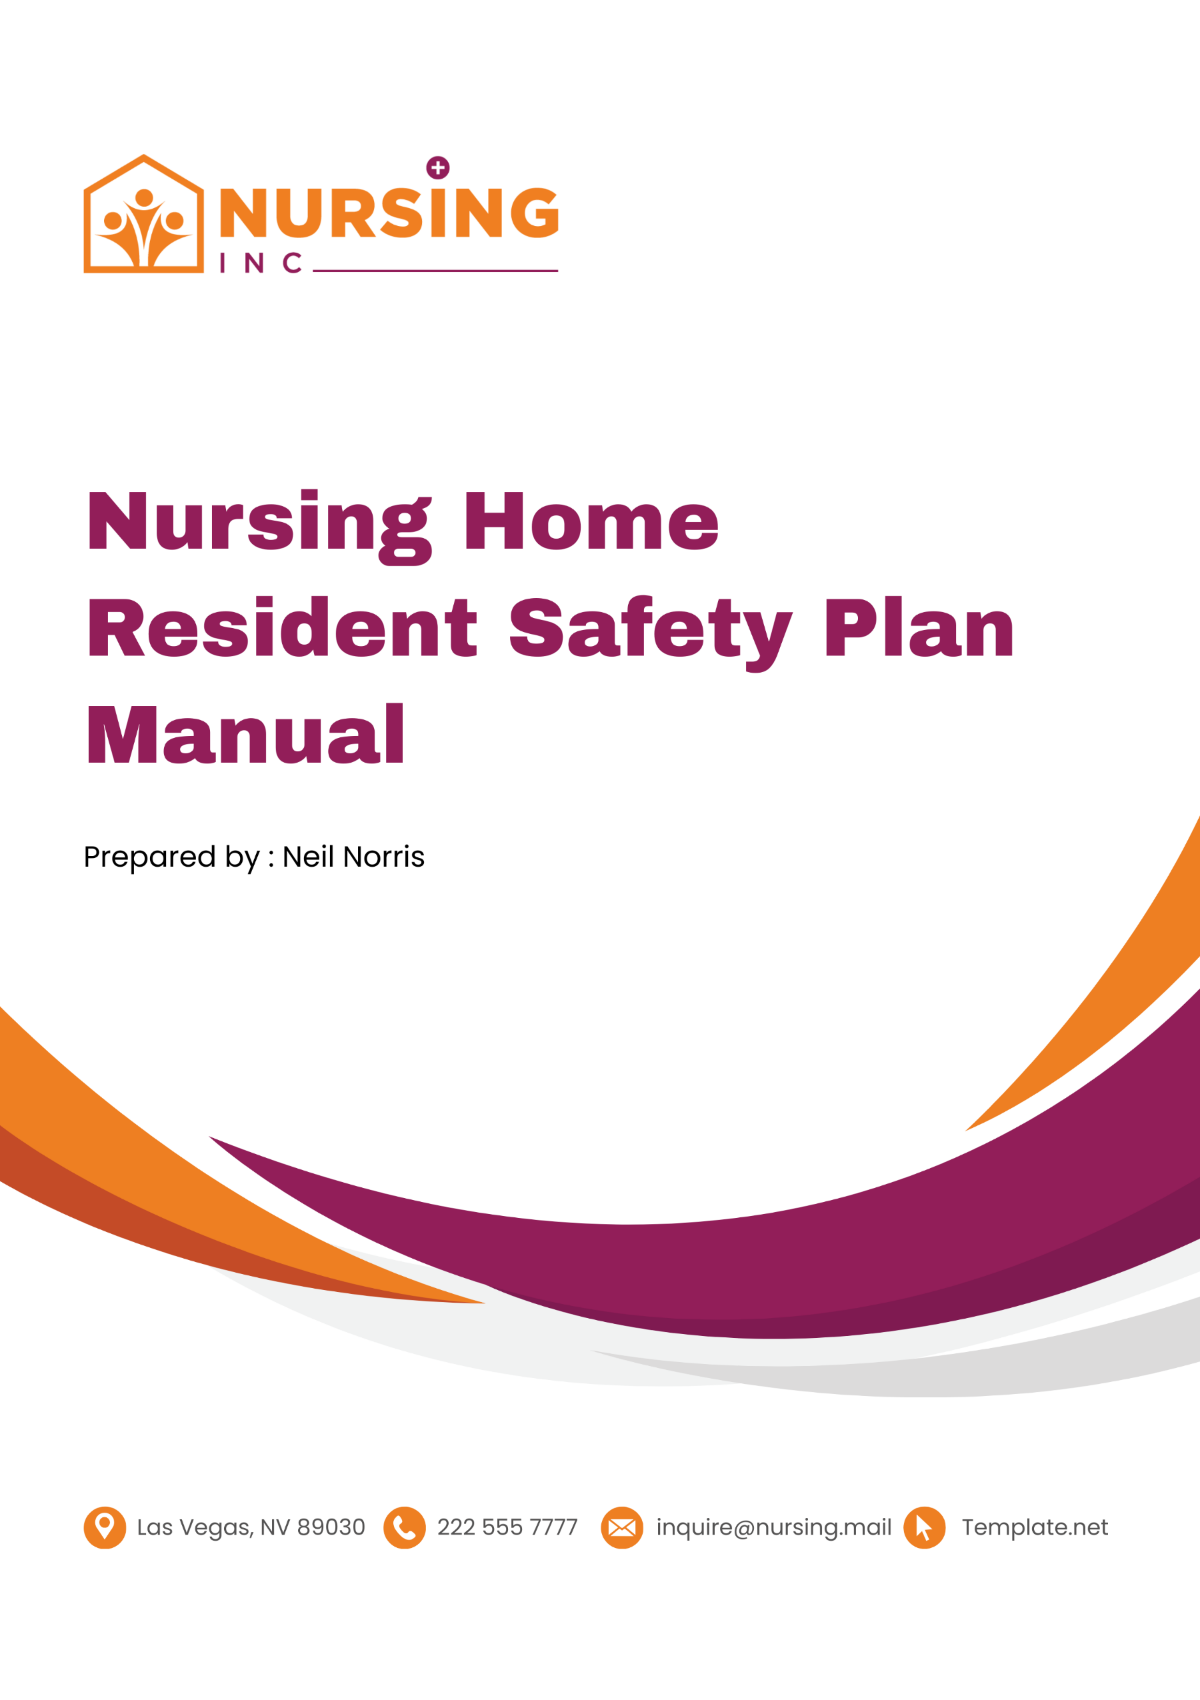 Nursing Home Resident Safety Plan Manual Template